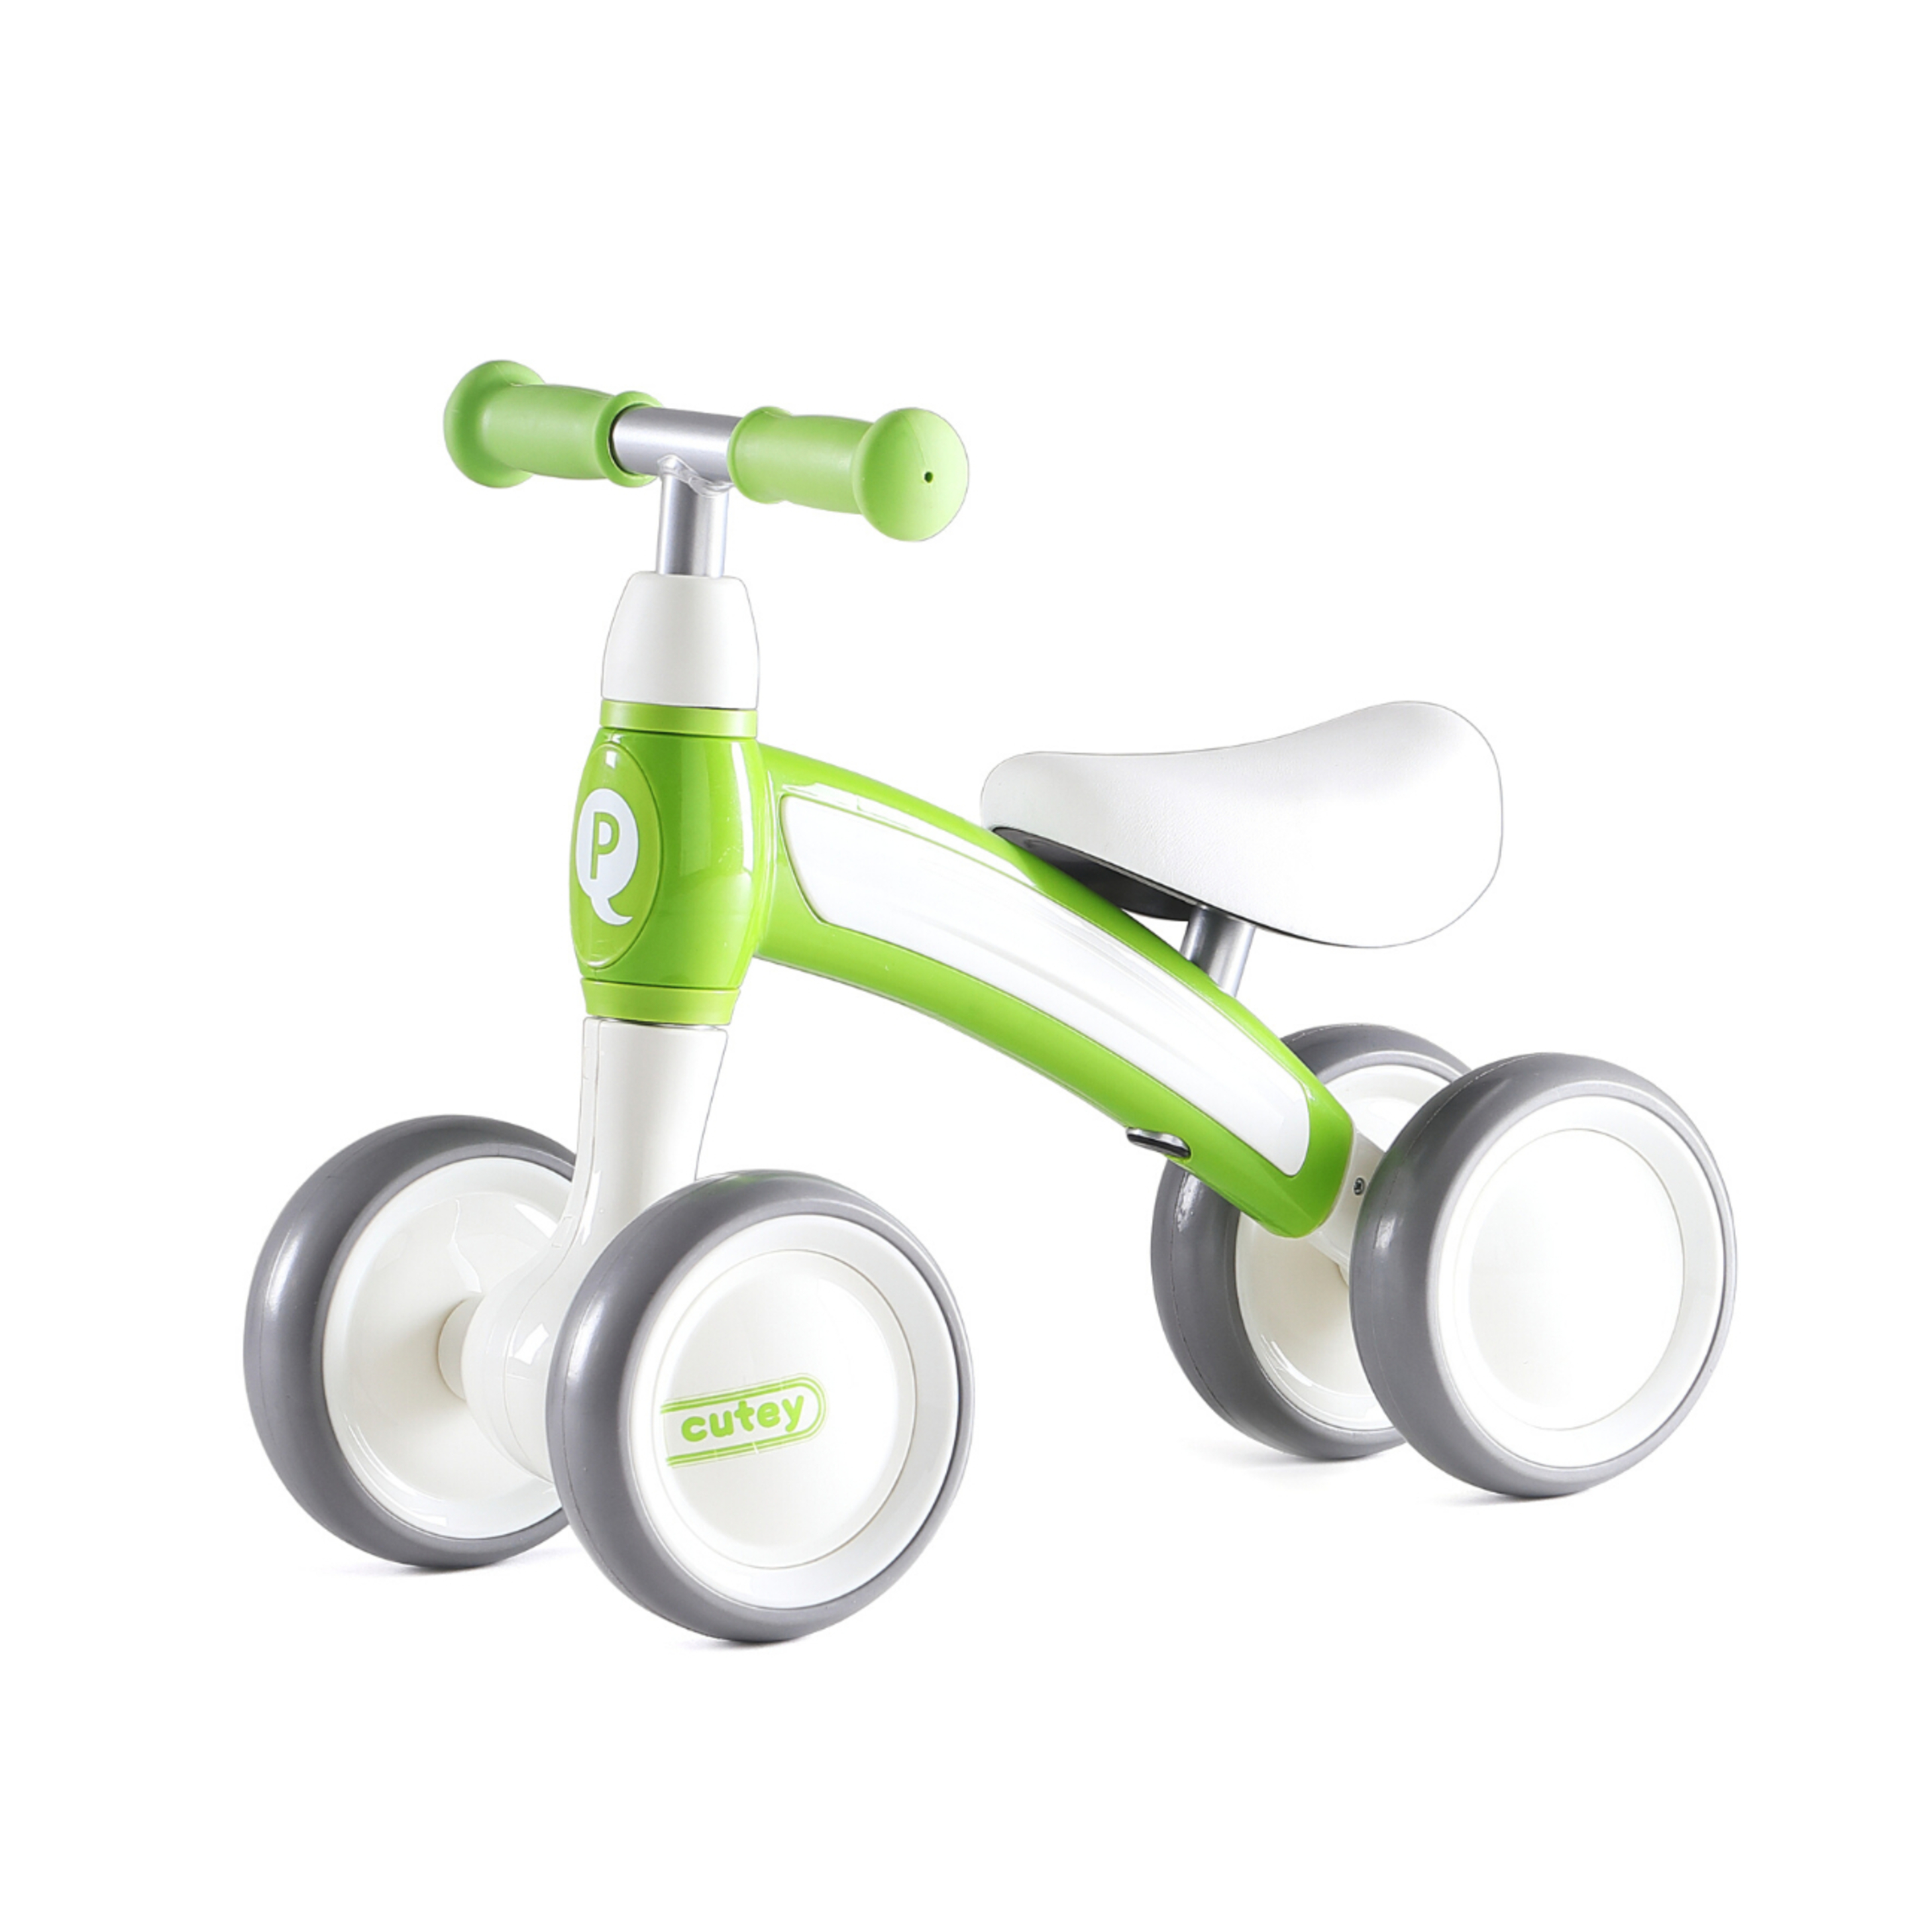 Bicicleta Equilibrio Menino Qplay Cutey 1-3 Anos Verde - verde - 